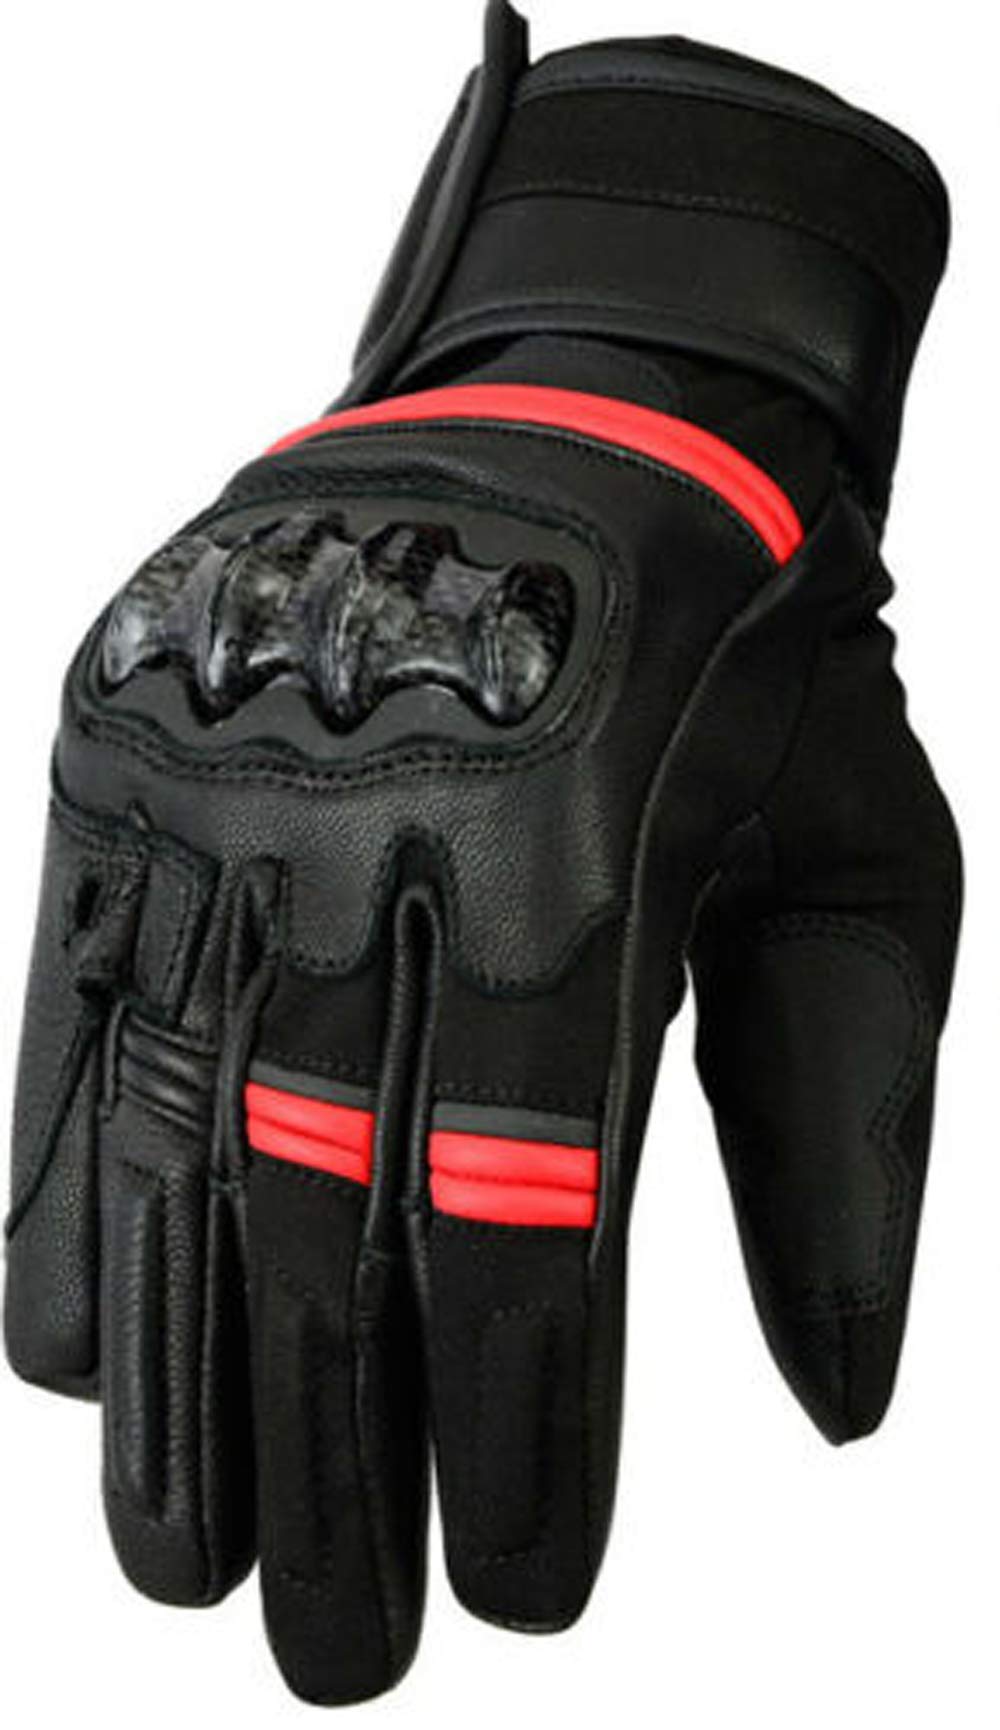 Bikers Gear Australia Limited Vega kurz Sport Motorrad Handschuh rot, Größe Medium von Bikers Gear